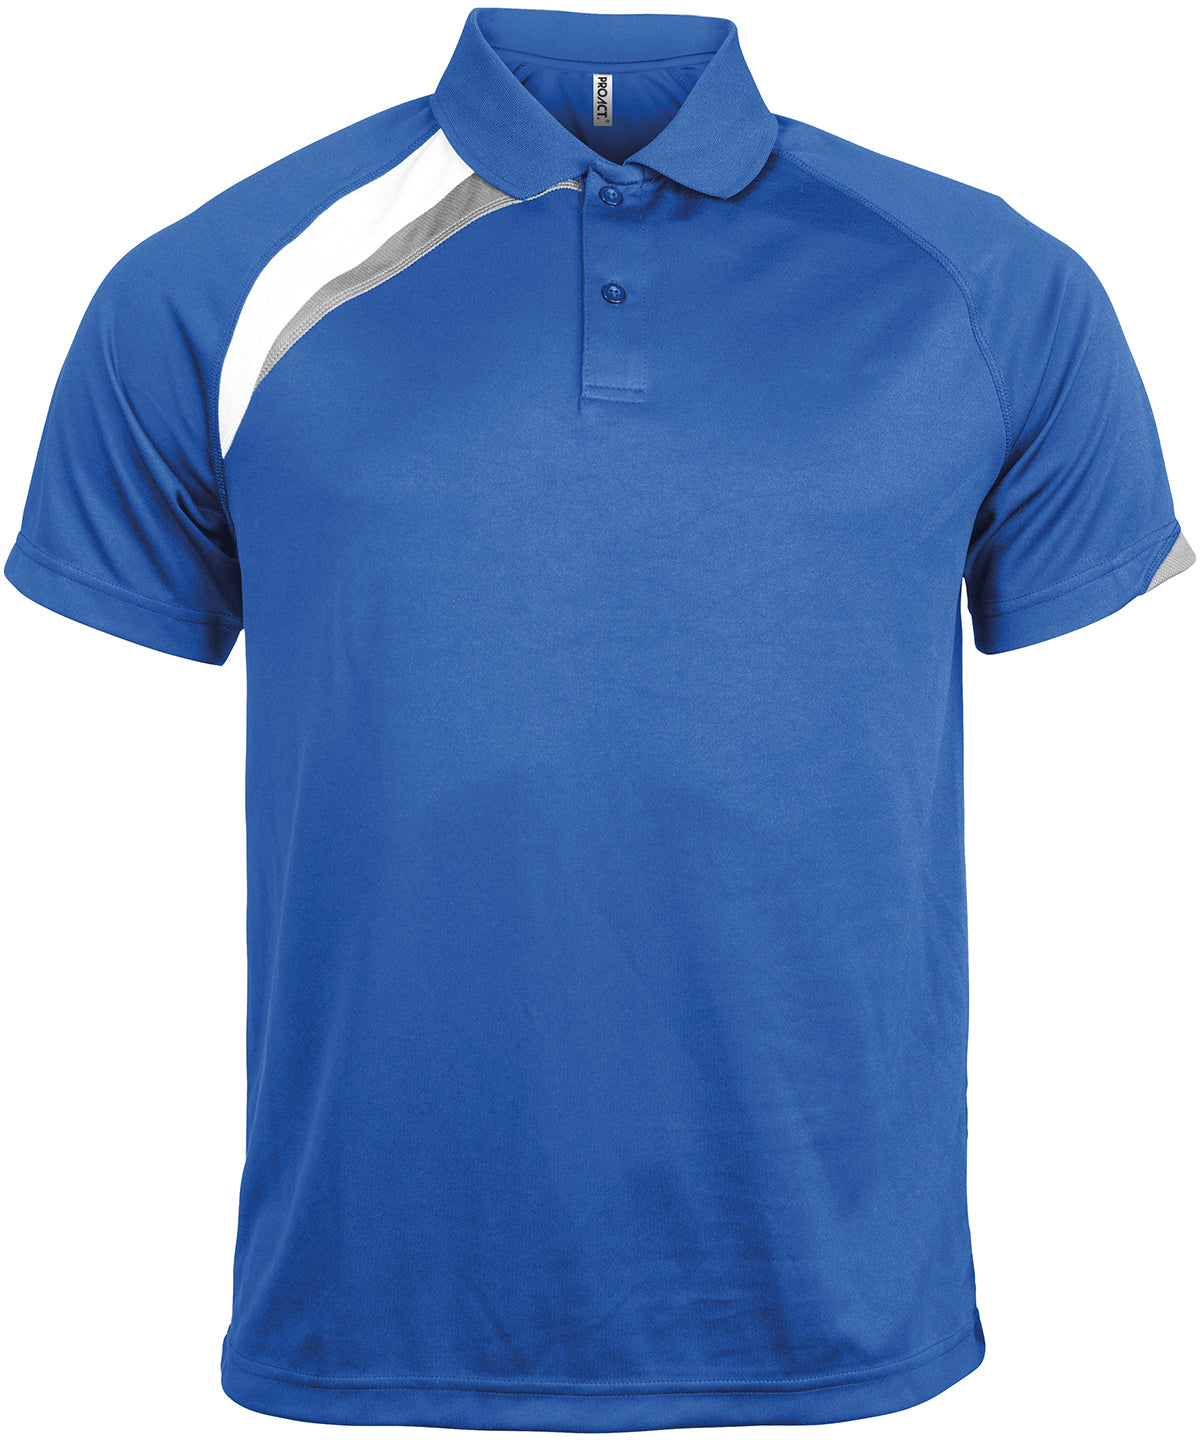 Personalised Polo Shirts - Black Kariban Proact Adults' short-sleeved sports polo shirt